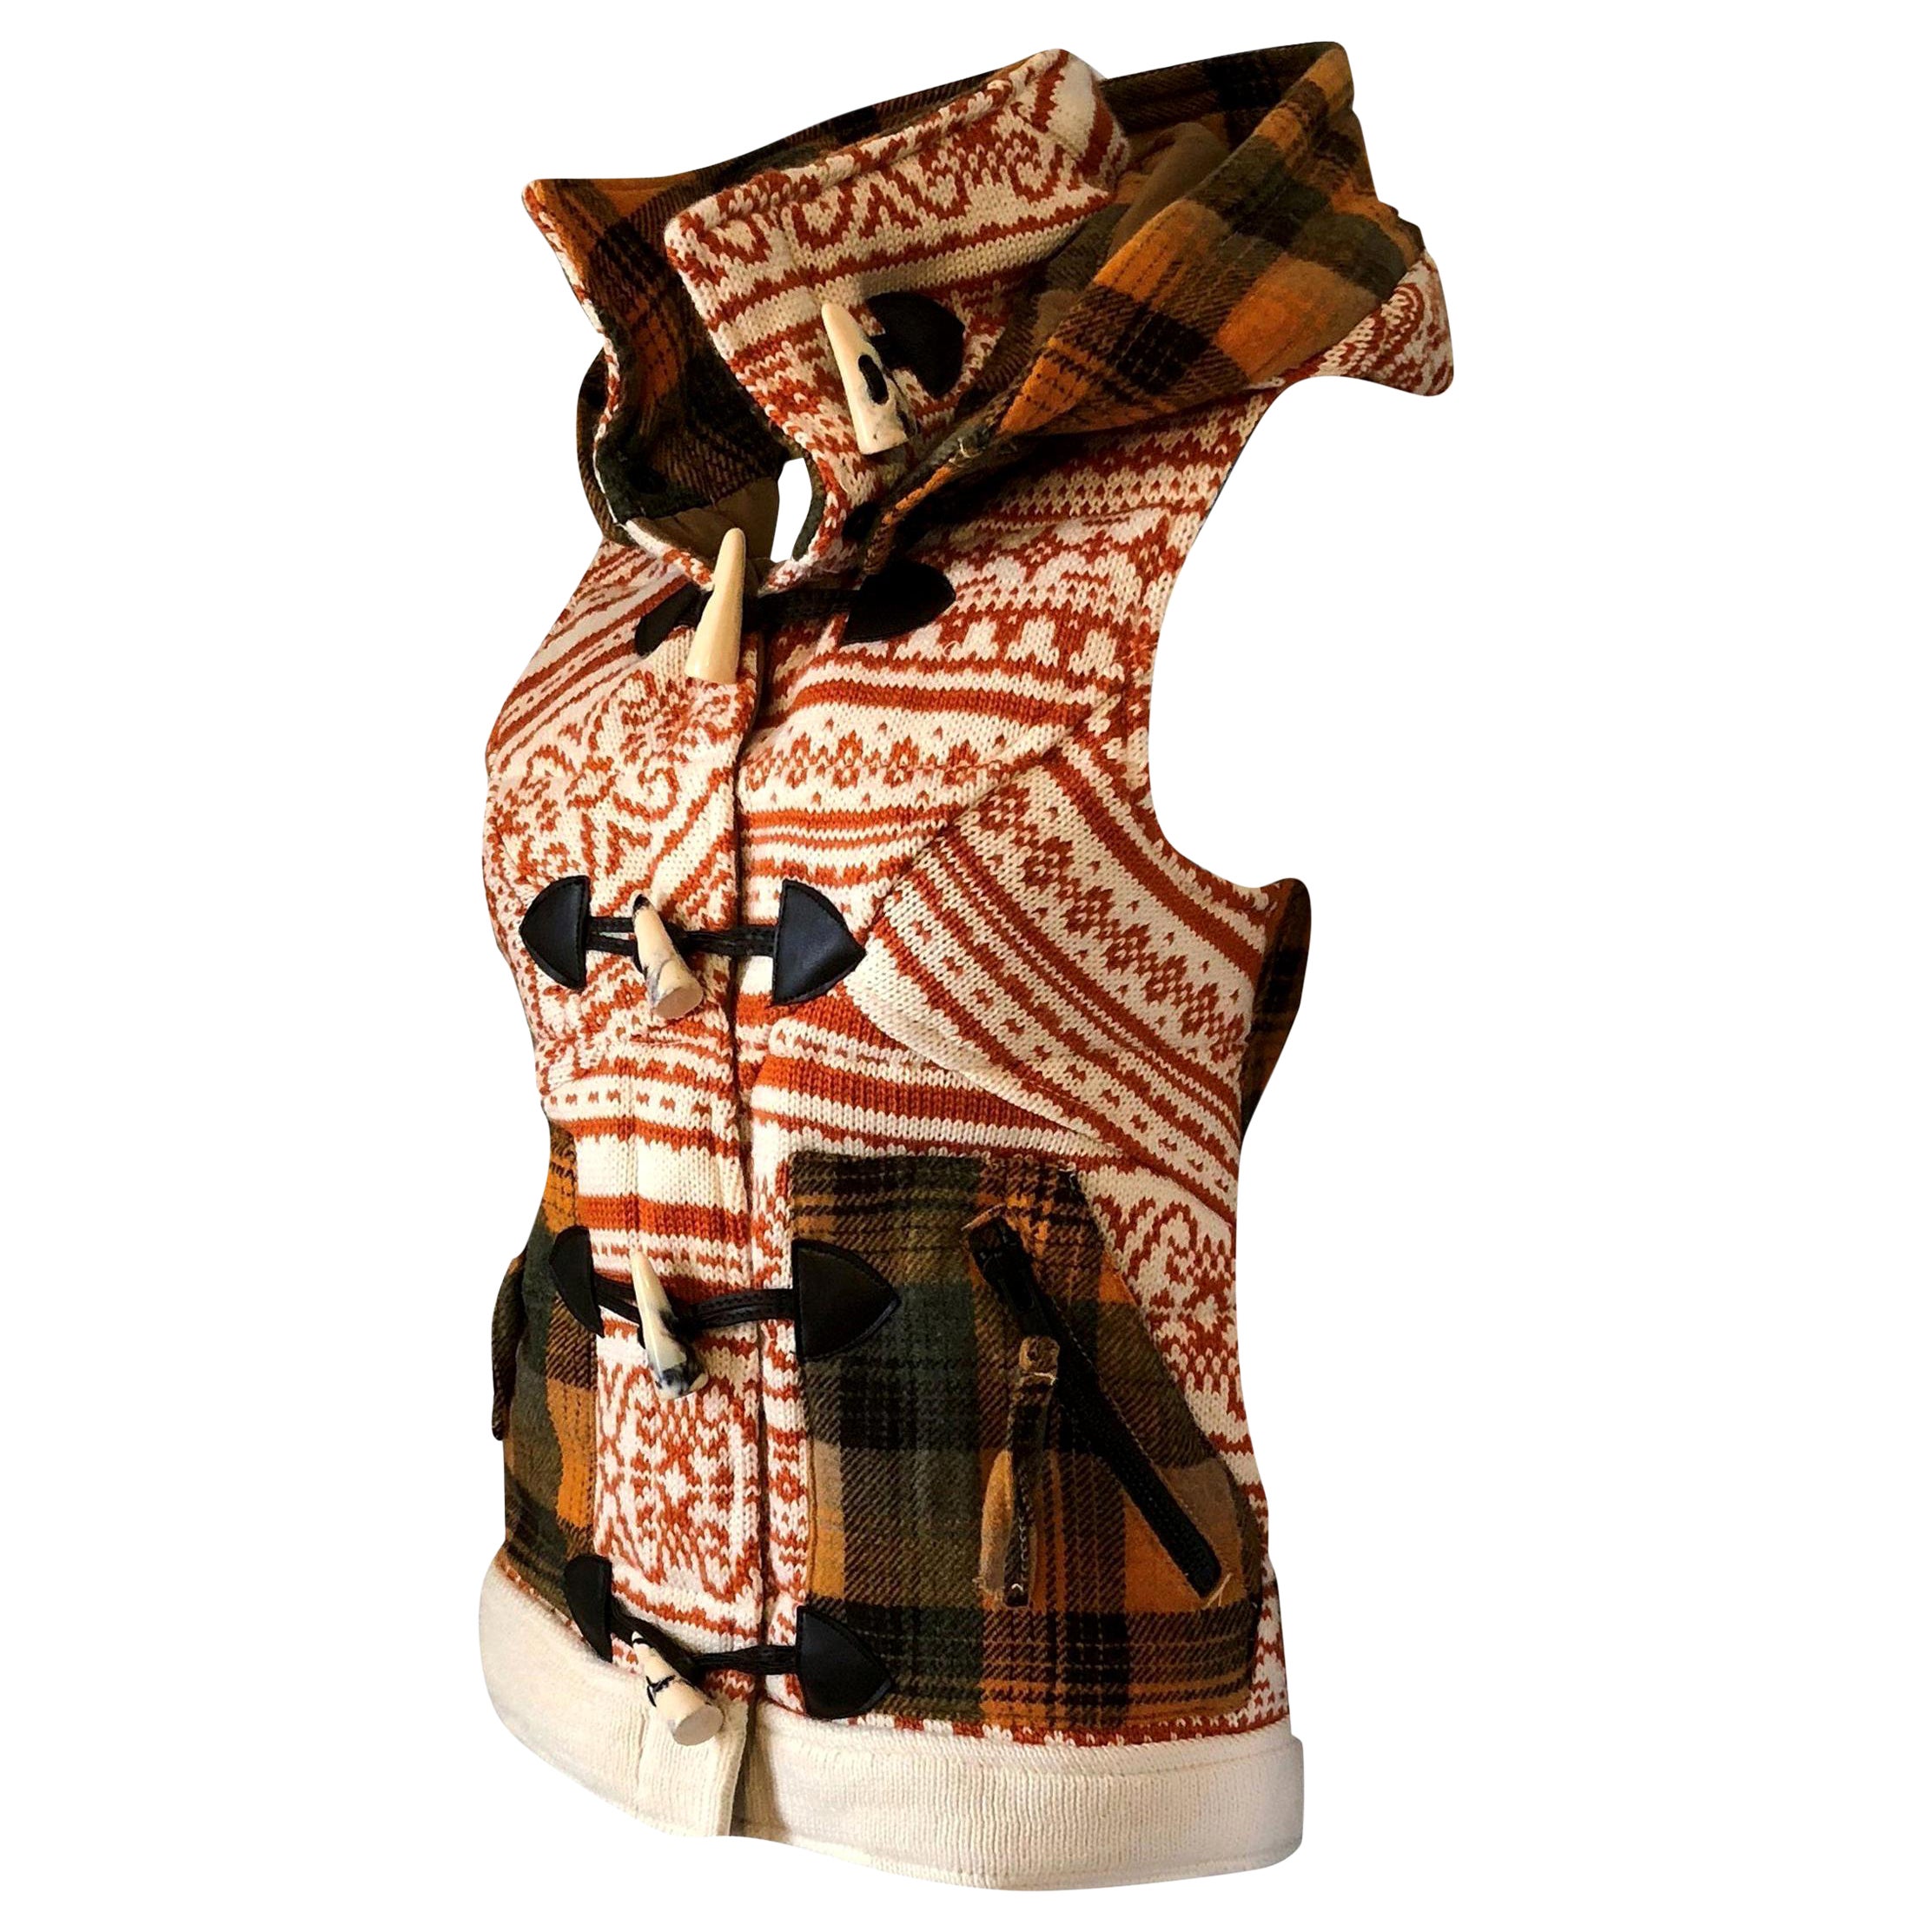 New Da-Nang Knit Wool Vest With Detachable Hood $486